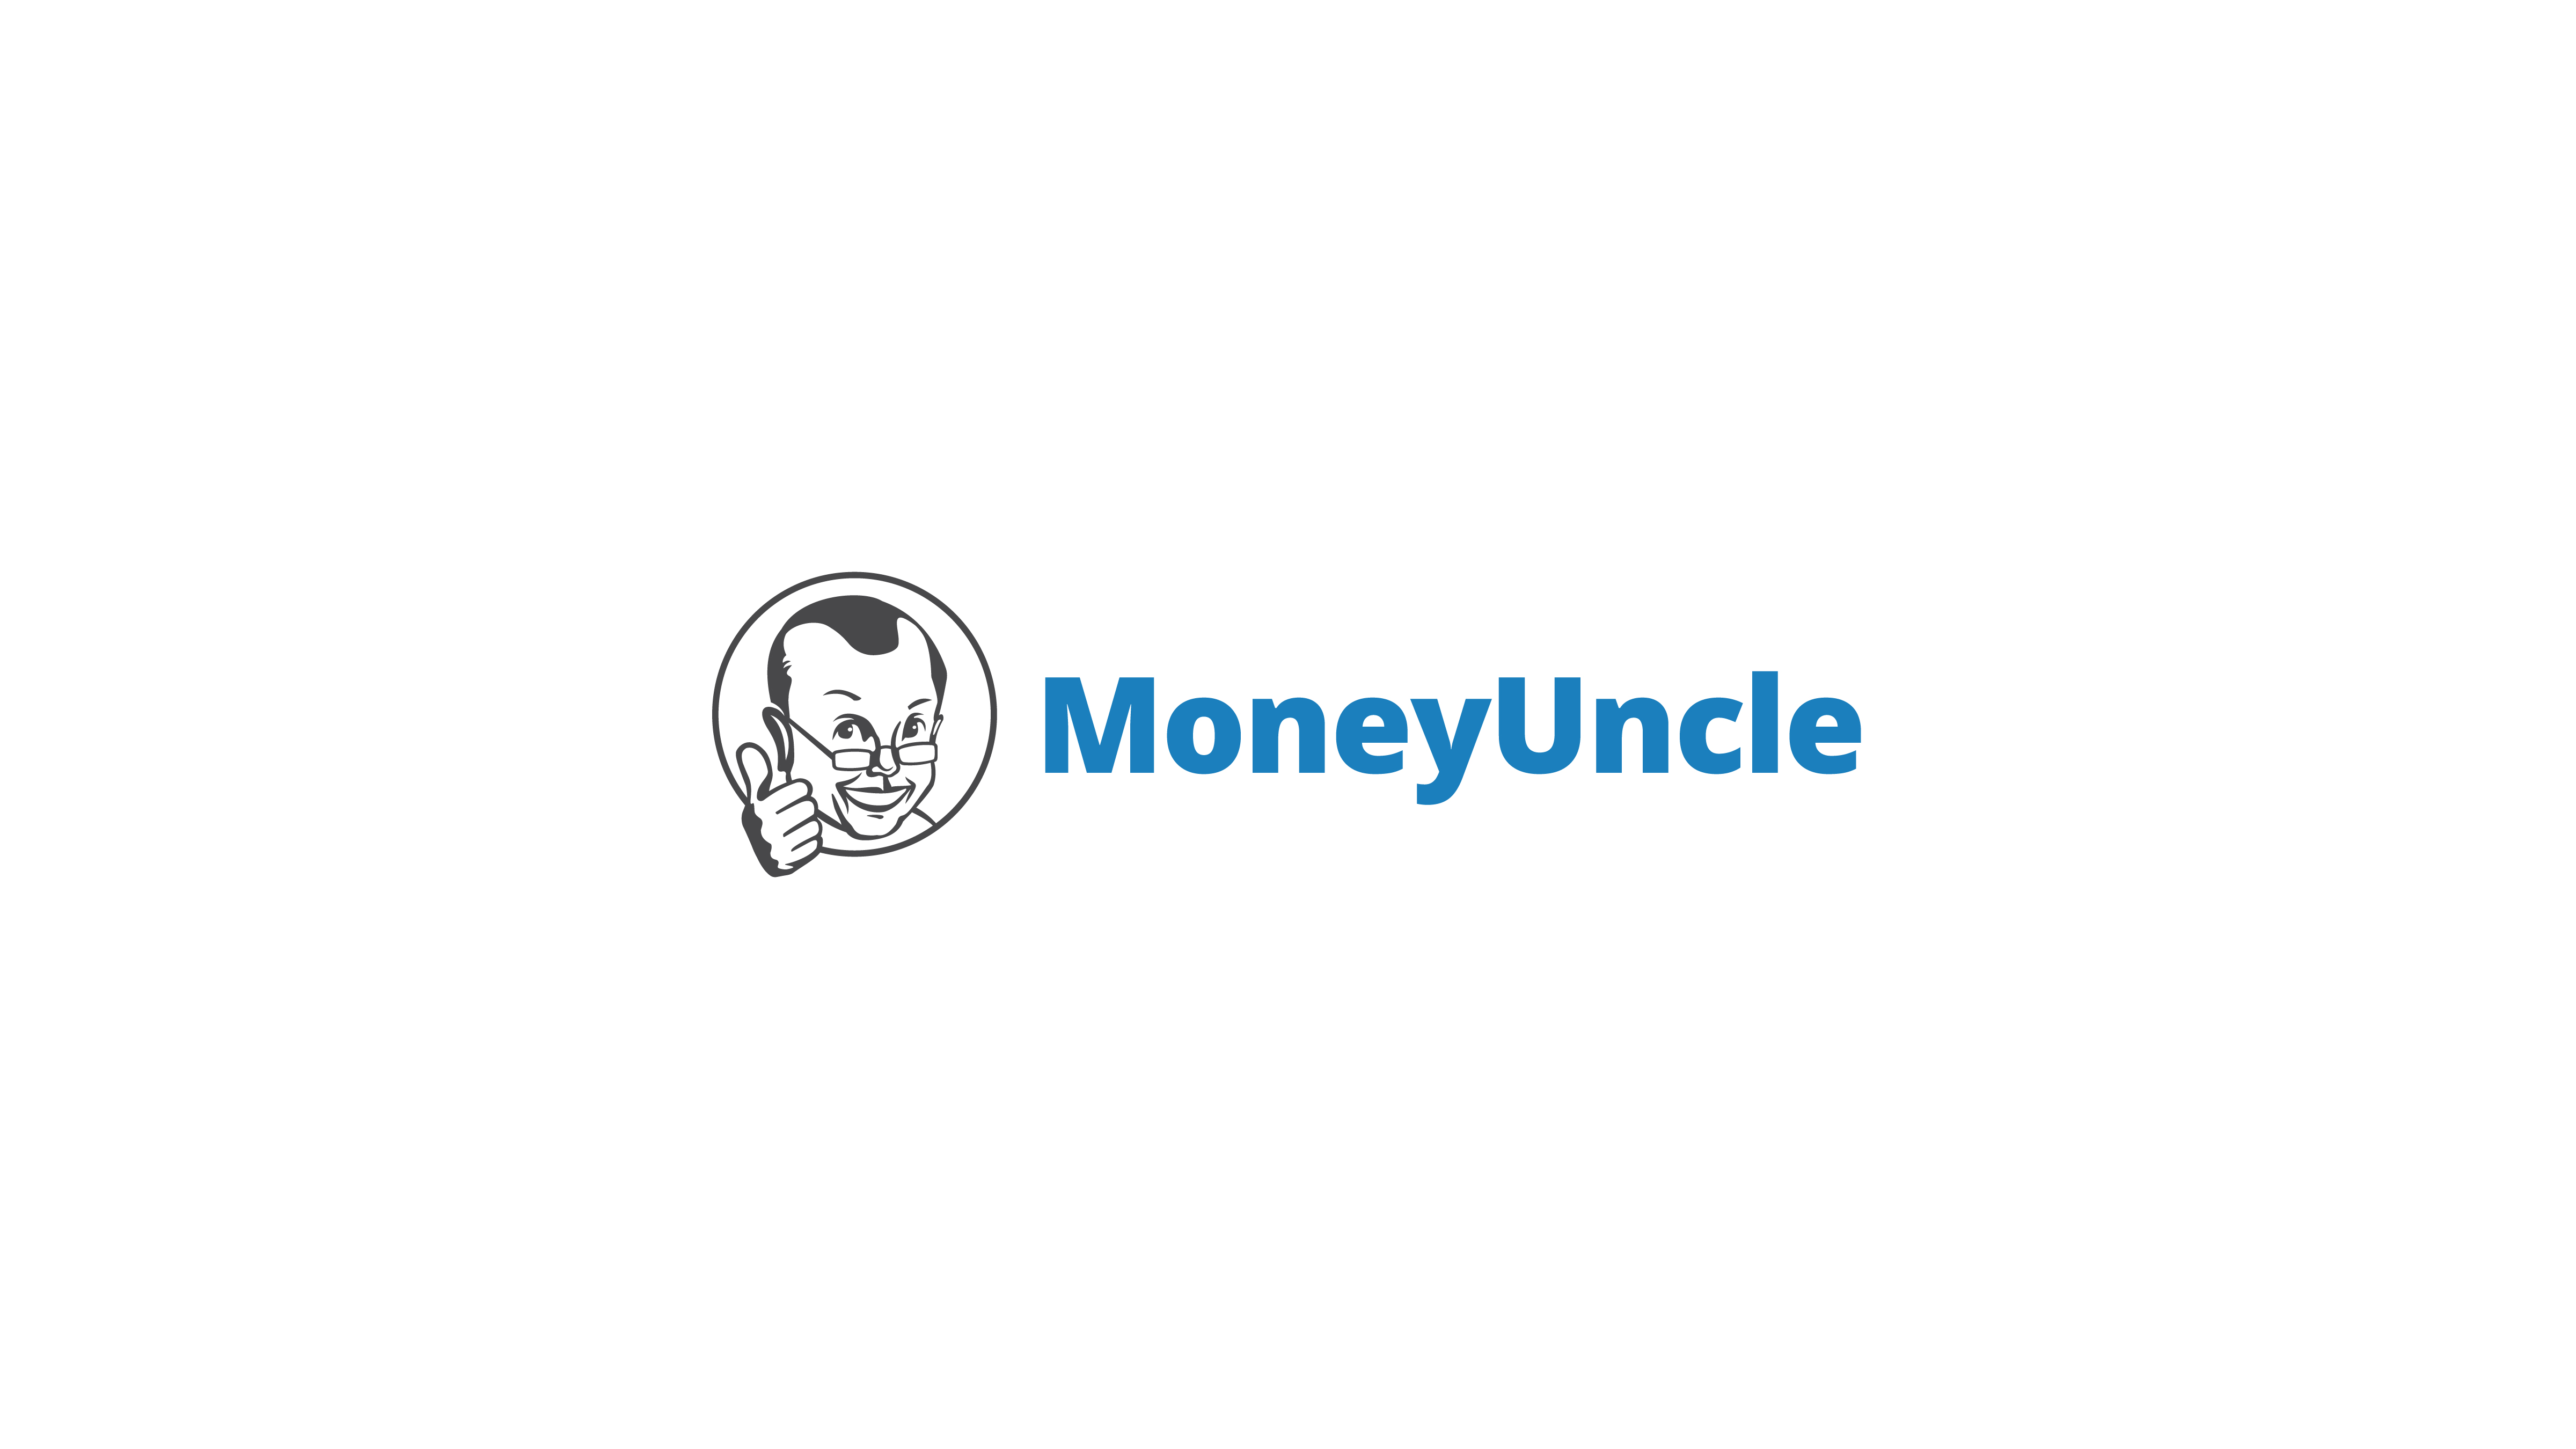 MoneyUncle Final Logo JPG